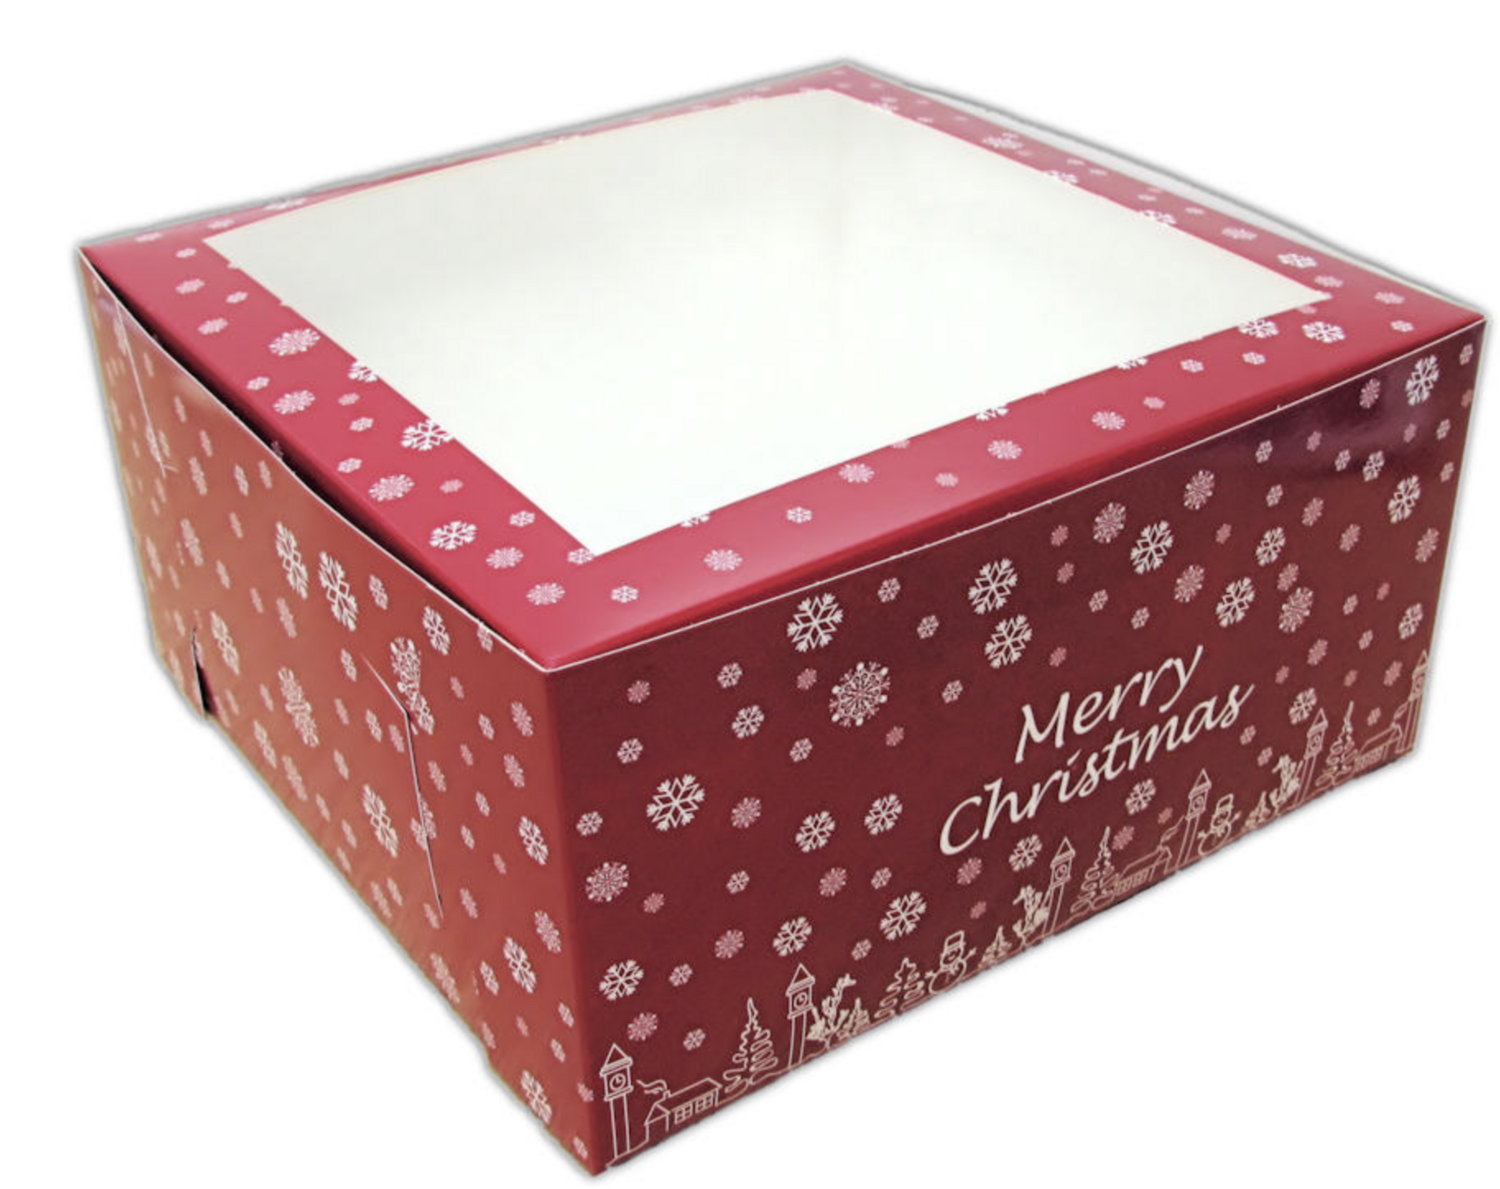 CHRISTMAS THEME Box - Χριστουγεννιάτικο Κουτί 25εκ ΜΟΝΟ ΓΙΑ ΠΑΡΑΛΑΒΗ ΑΠΟ ΤΟ CAKES BY SAMANTHA